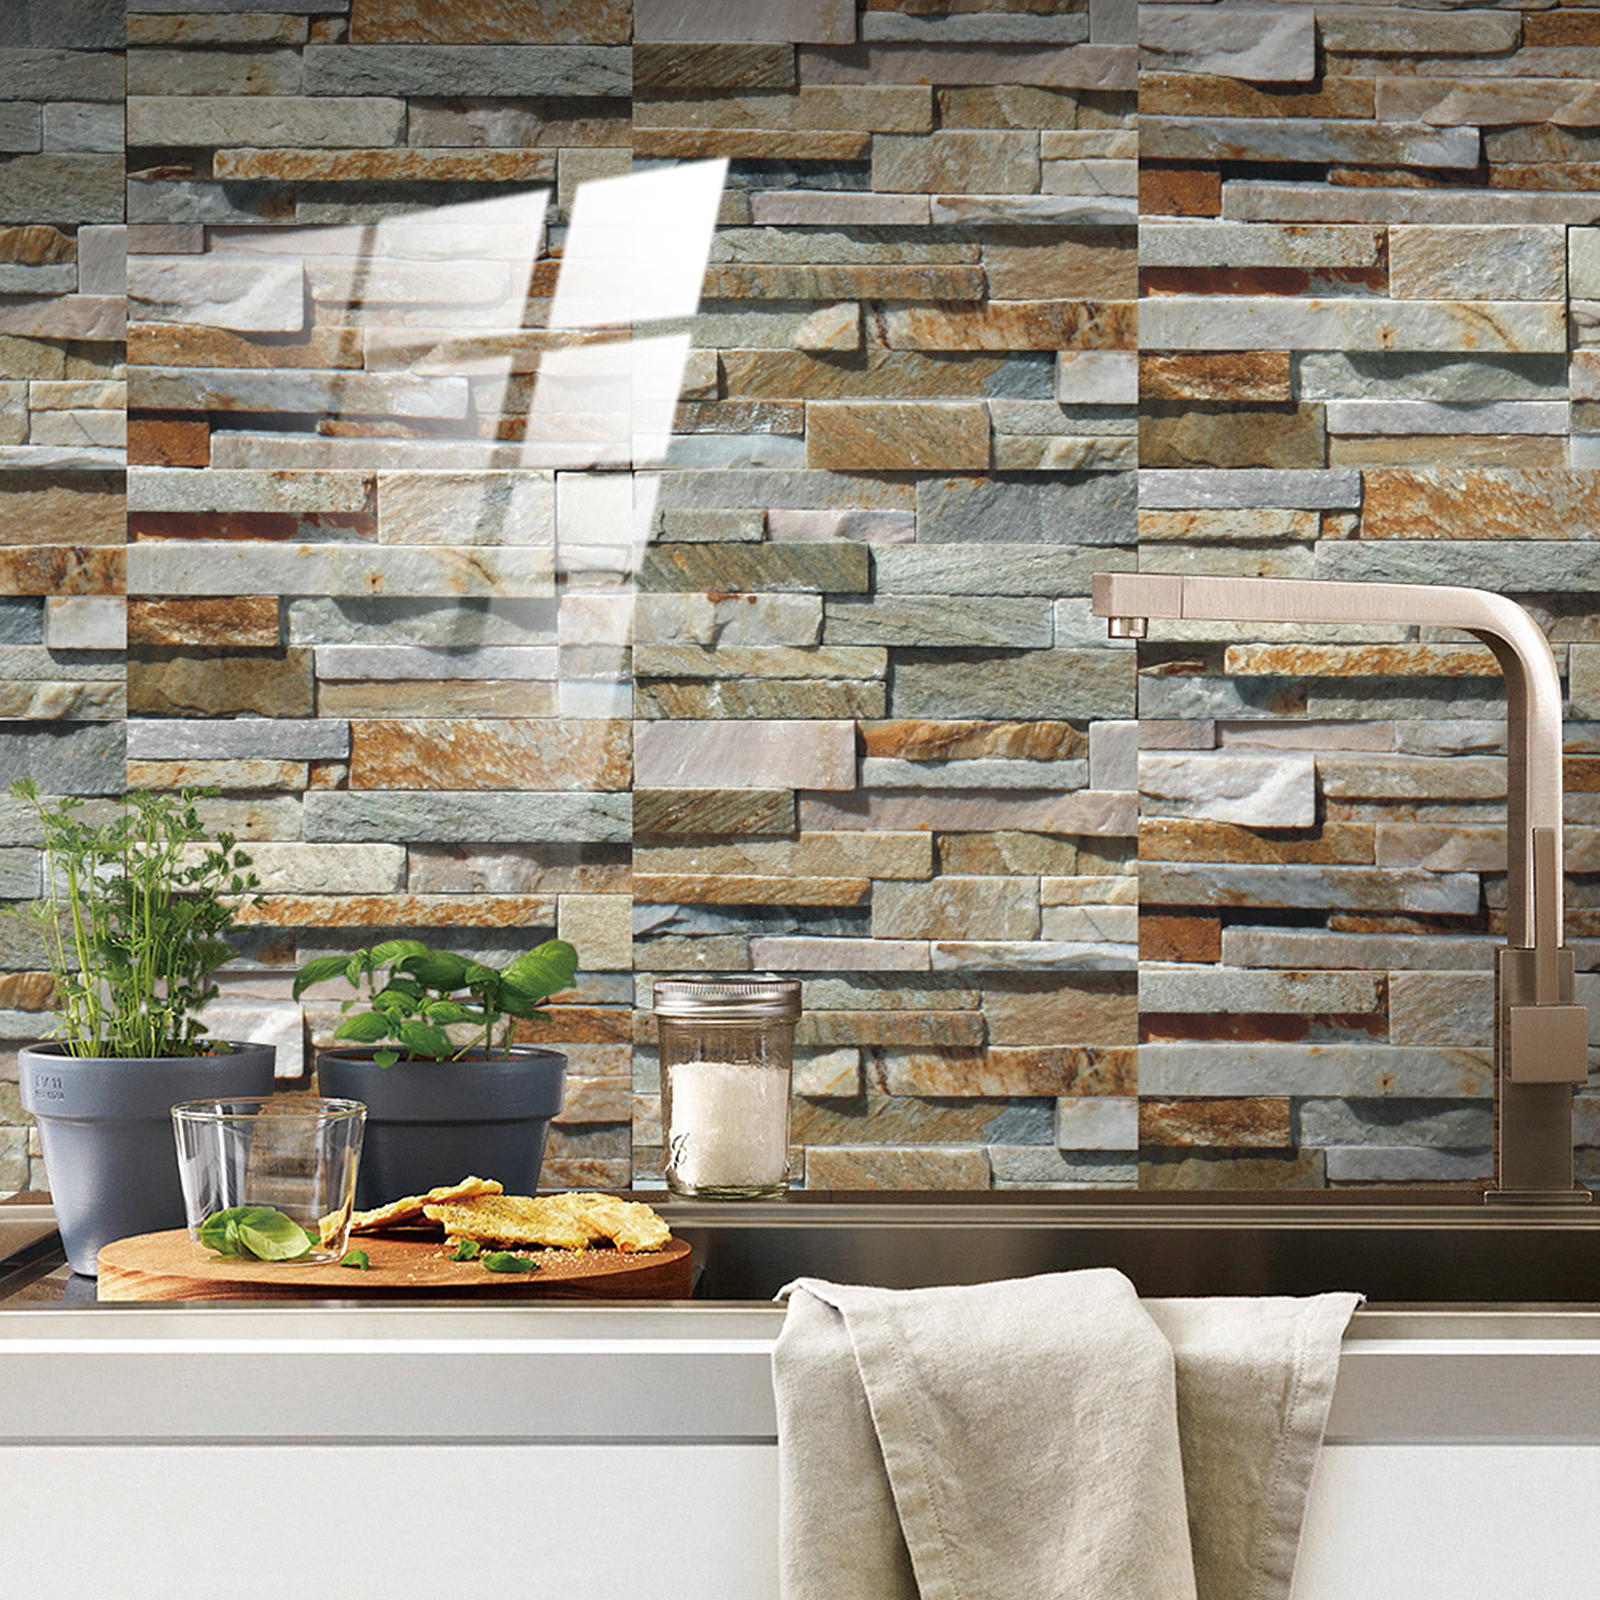 Self-adhesive Peel And Stick Wallpaper 3D Stone Design Brick Wall Tile For  Home Bathroom Kitchen Backsplash, 36 Packs 